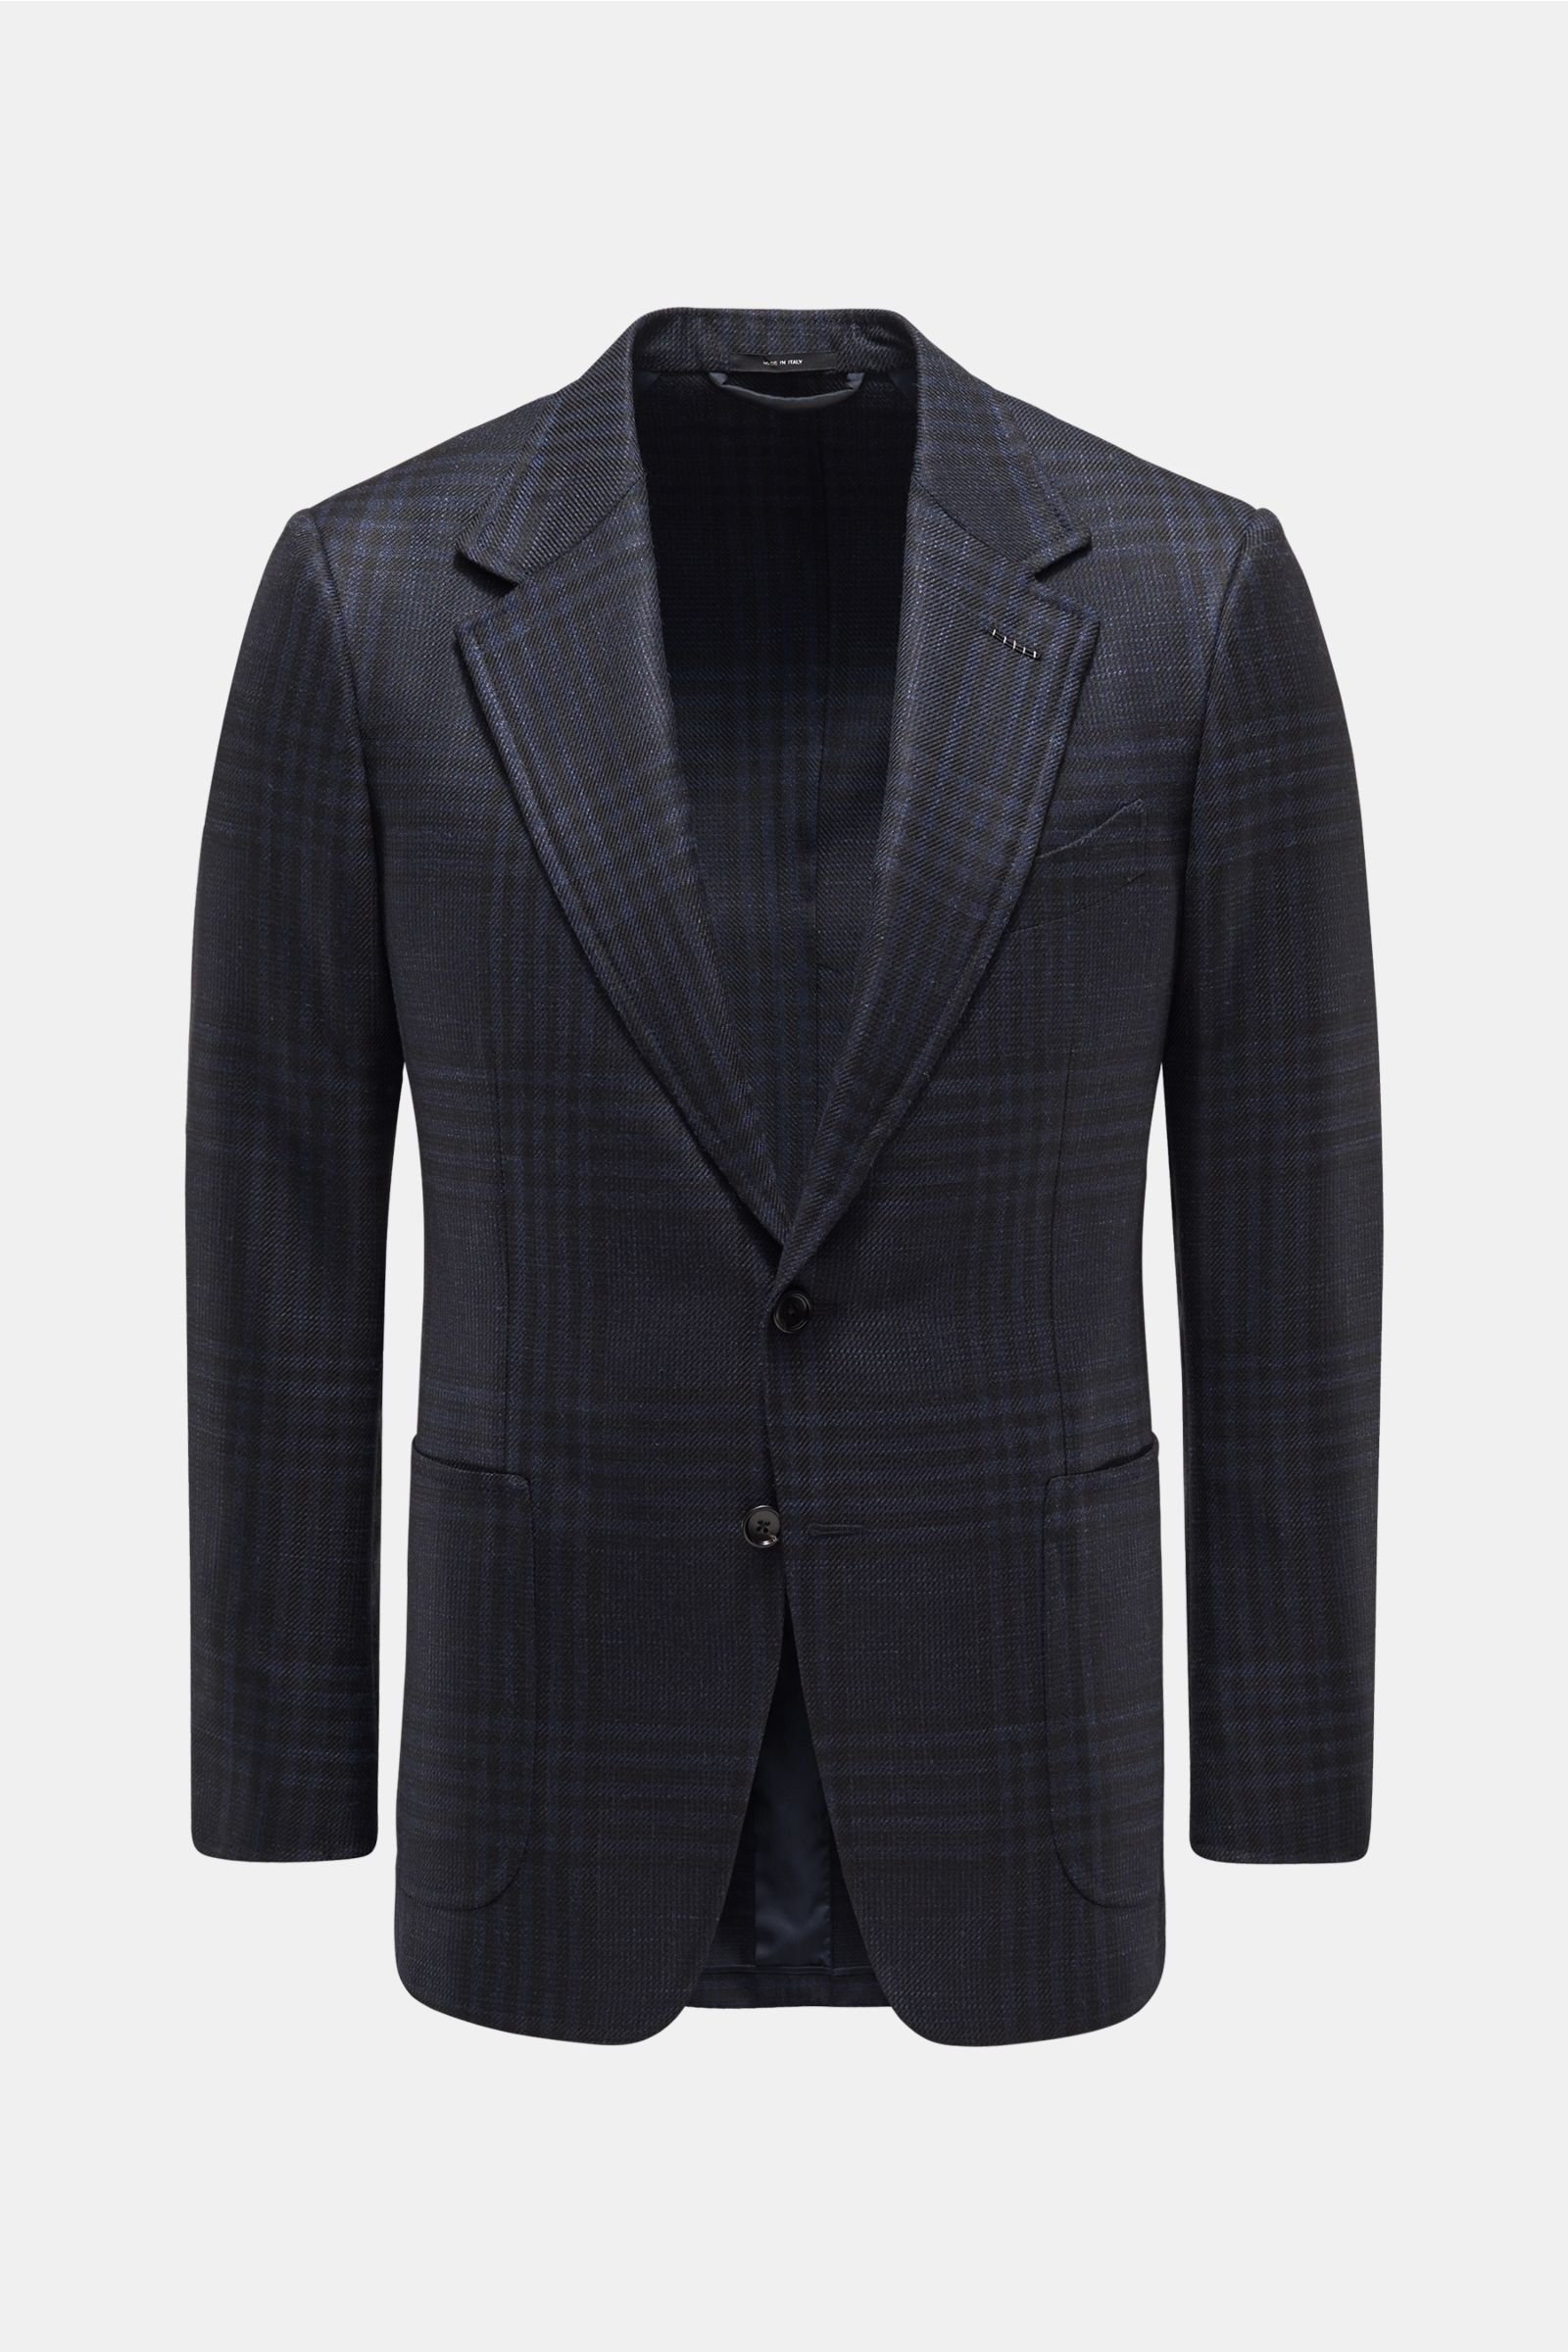 Smart-casual jacket 'Shelton' navy/black checked